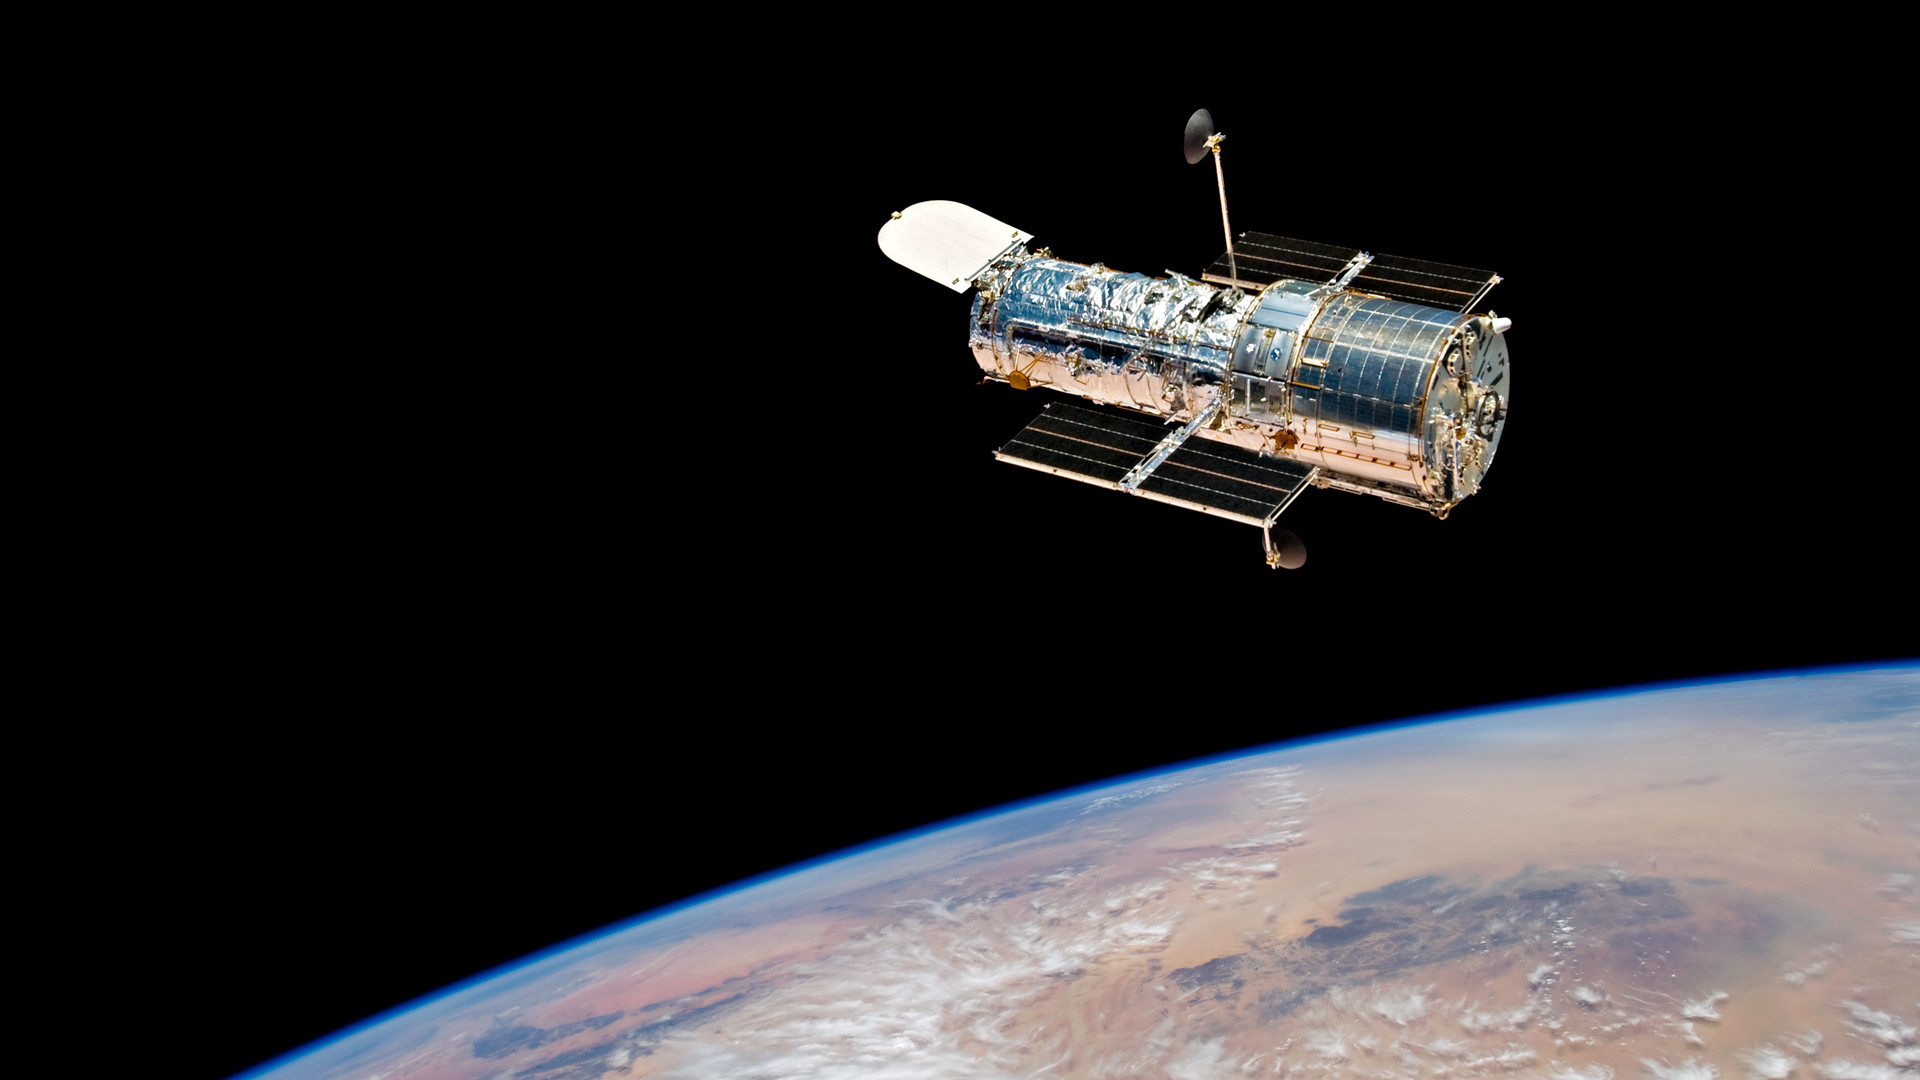 Photograph of Hubble Space Telescope in orbit